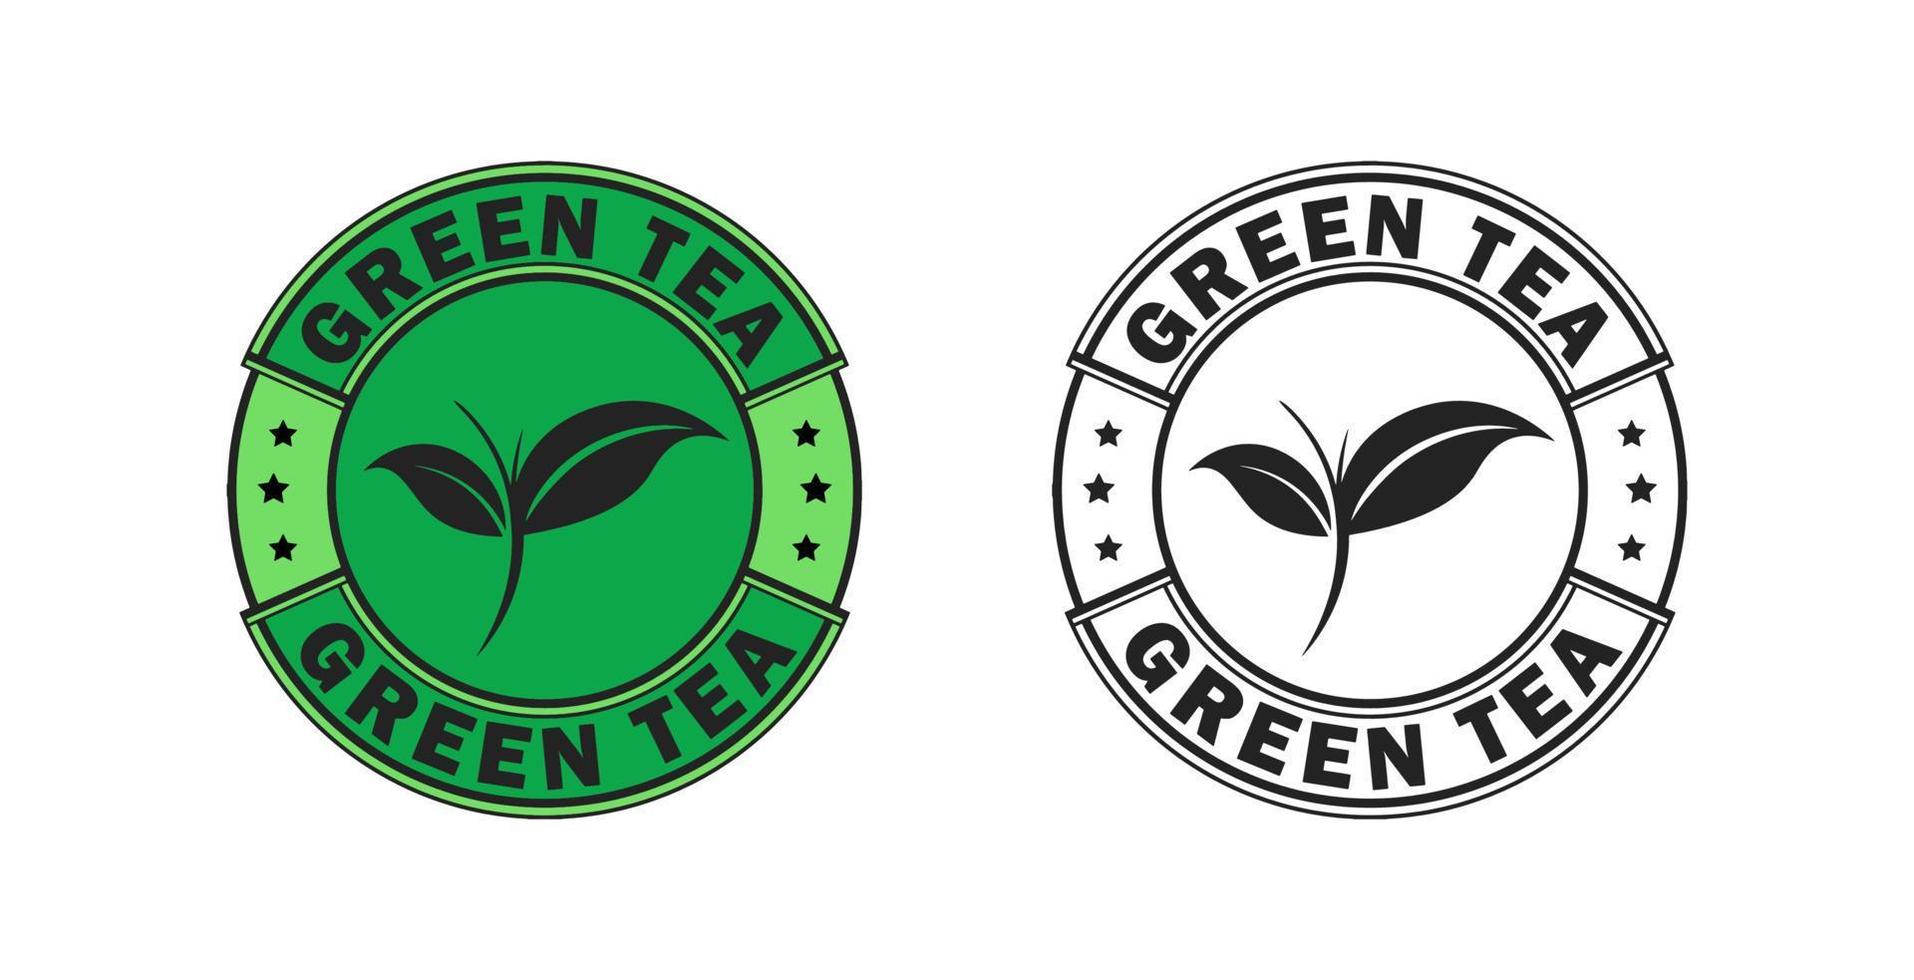 green tea product round shape label logo sticker vector